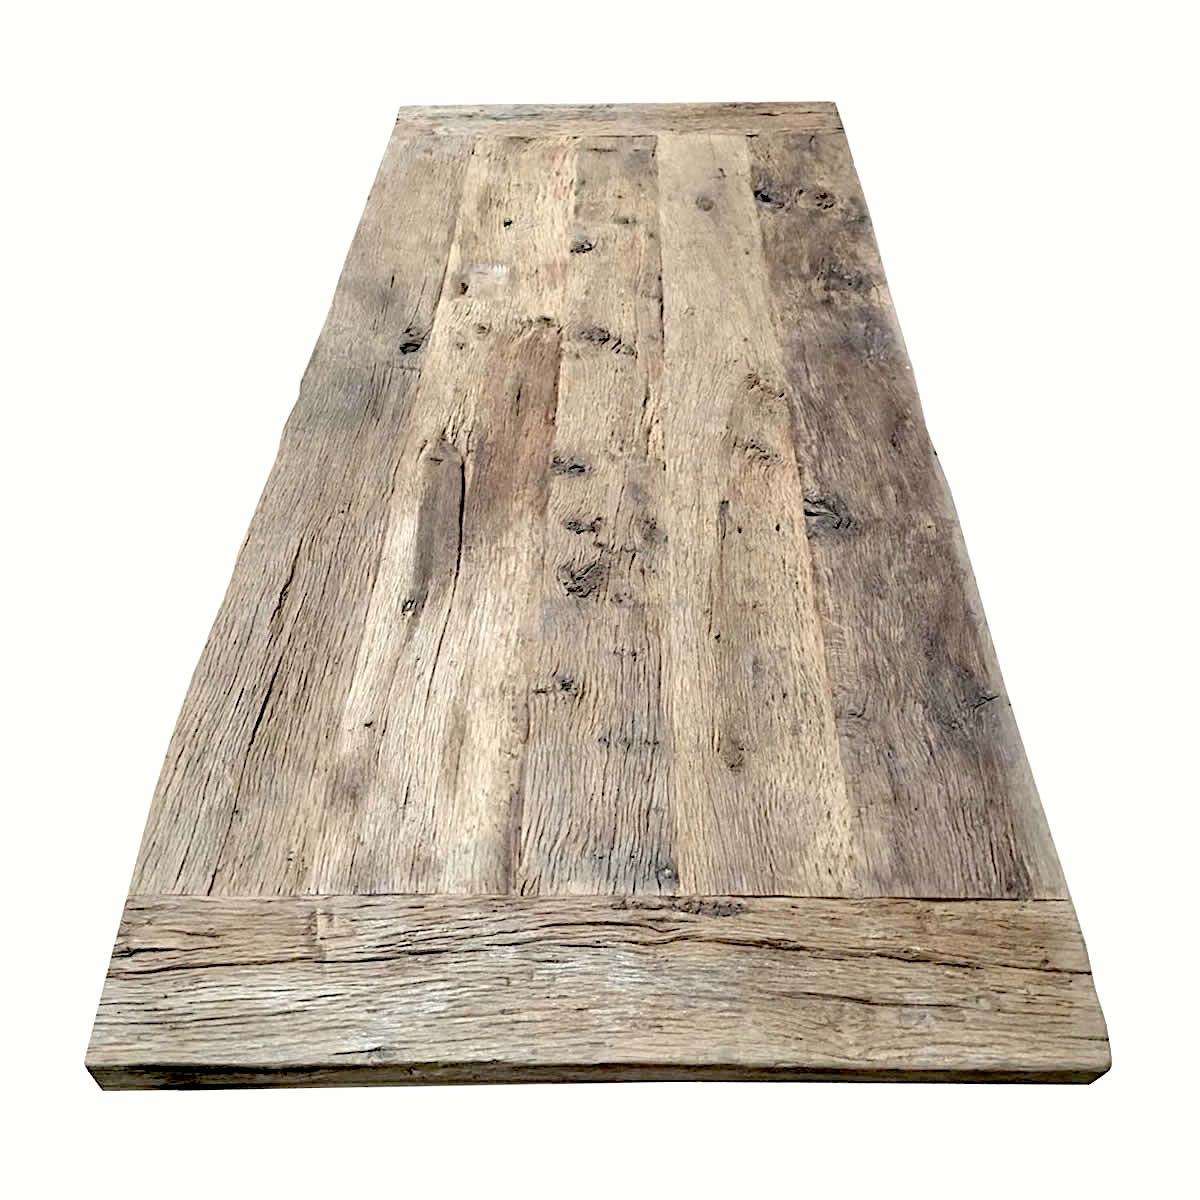  Rustic oak table top 